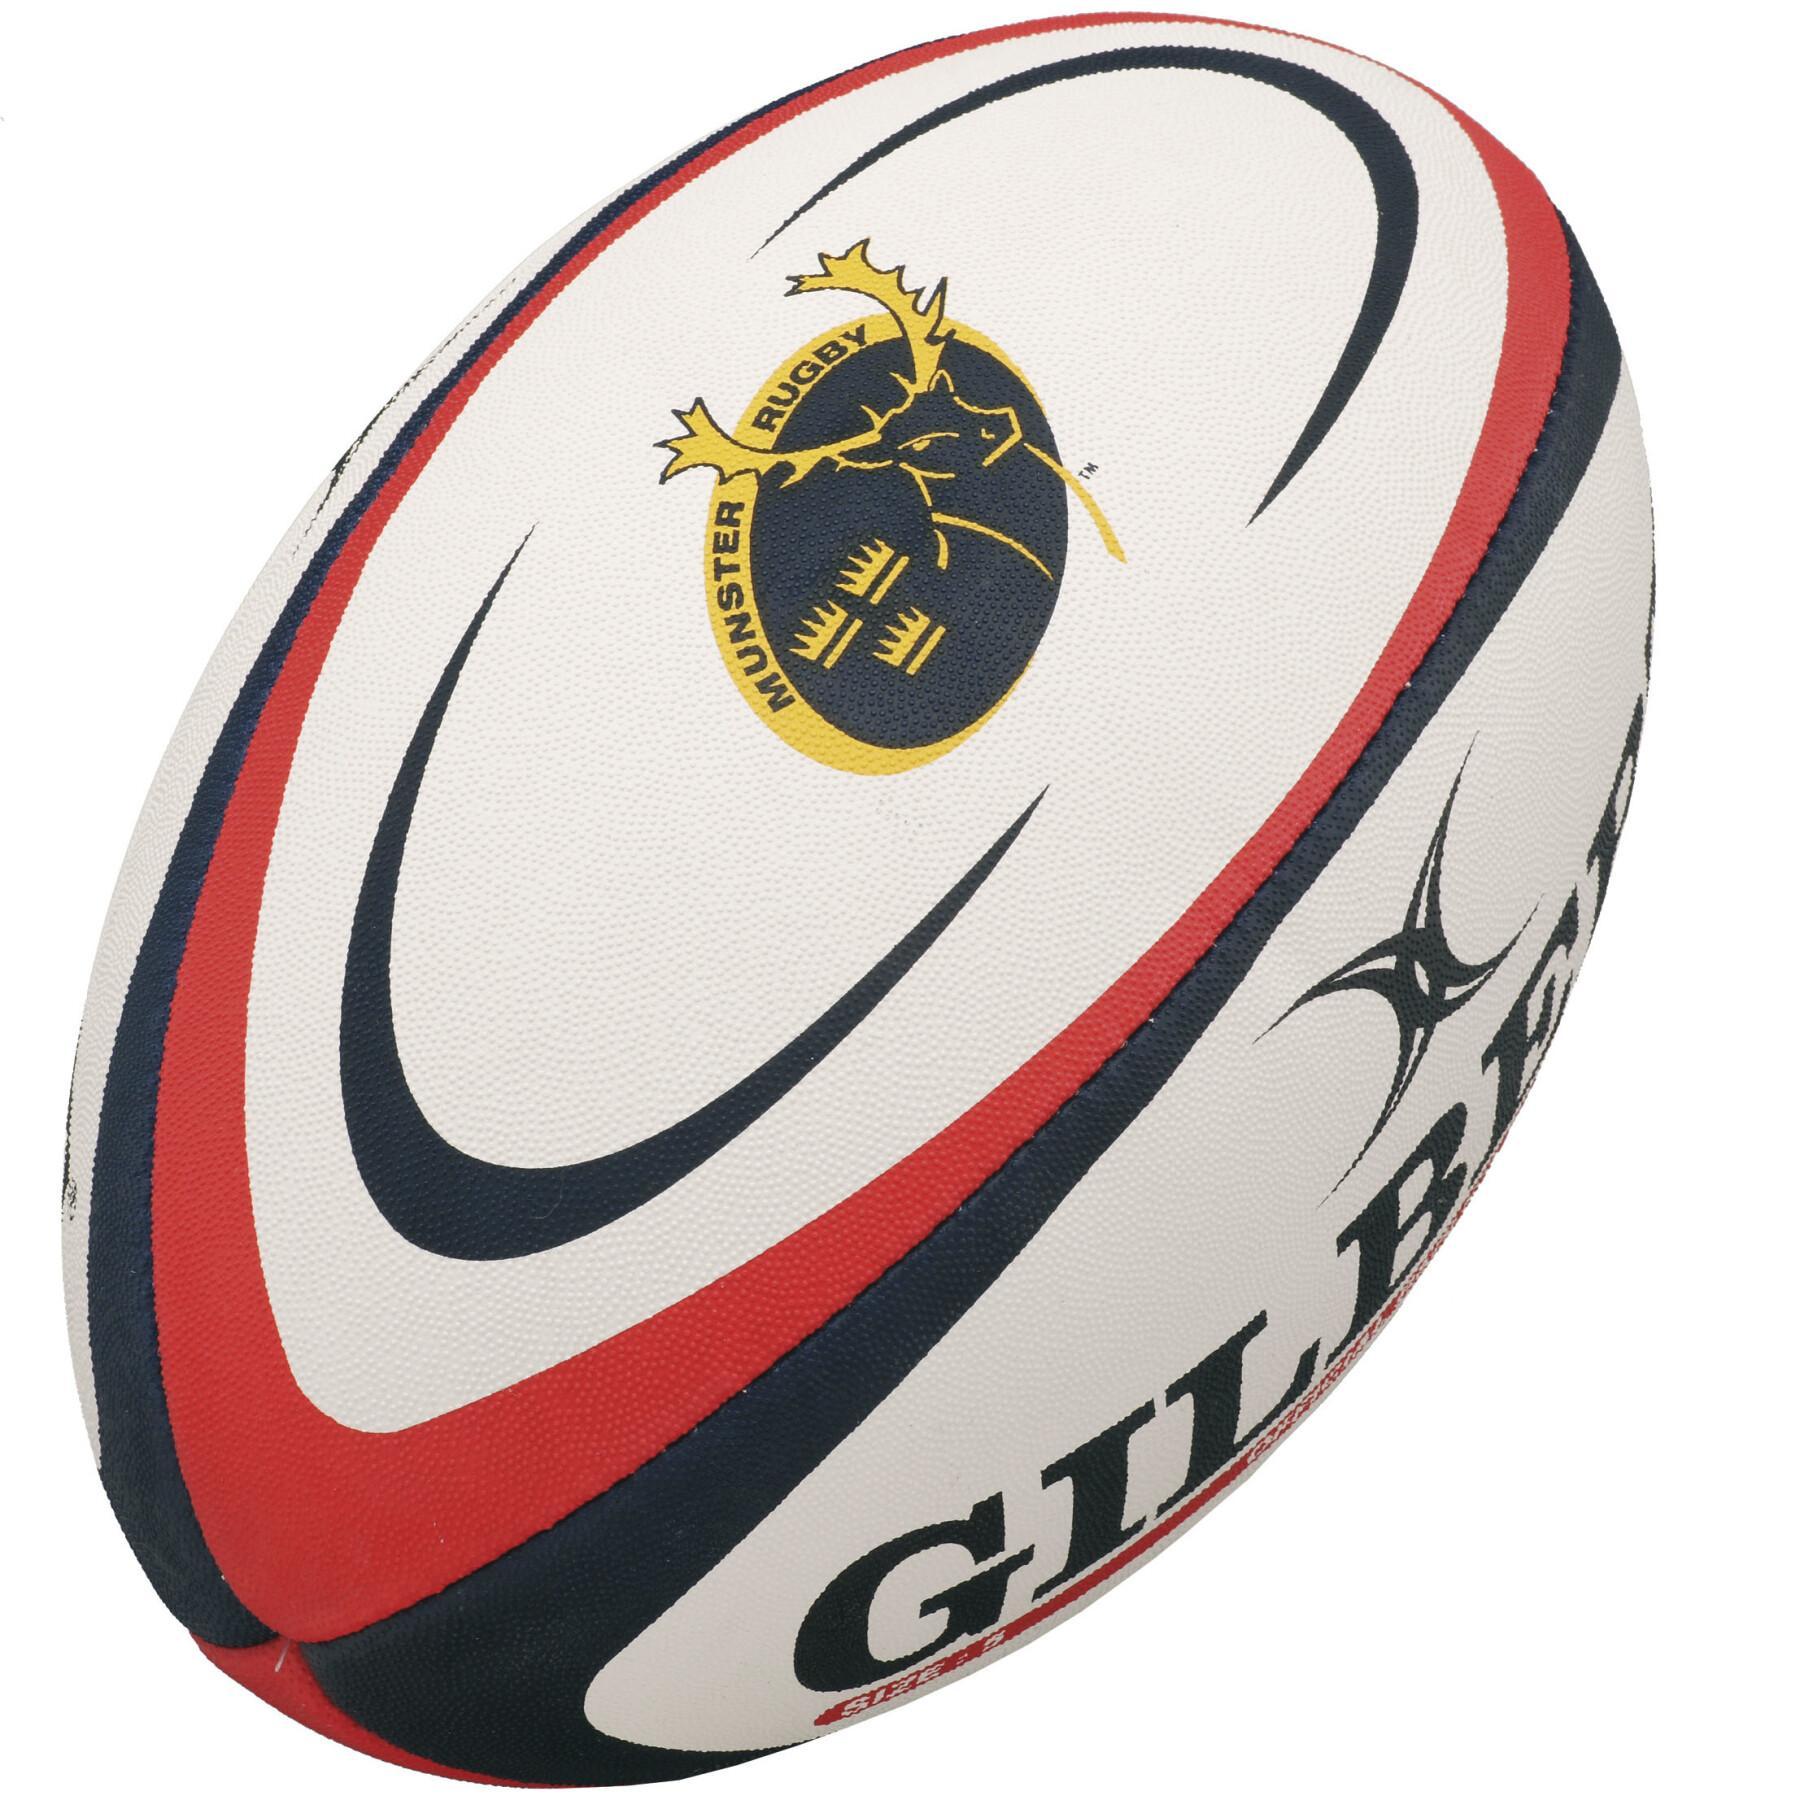 Balón de rugby midi Gilbert Munster (talla 2)